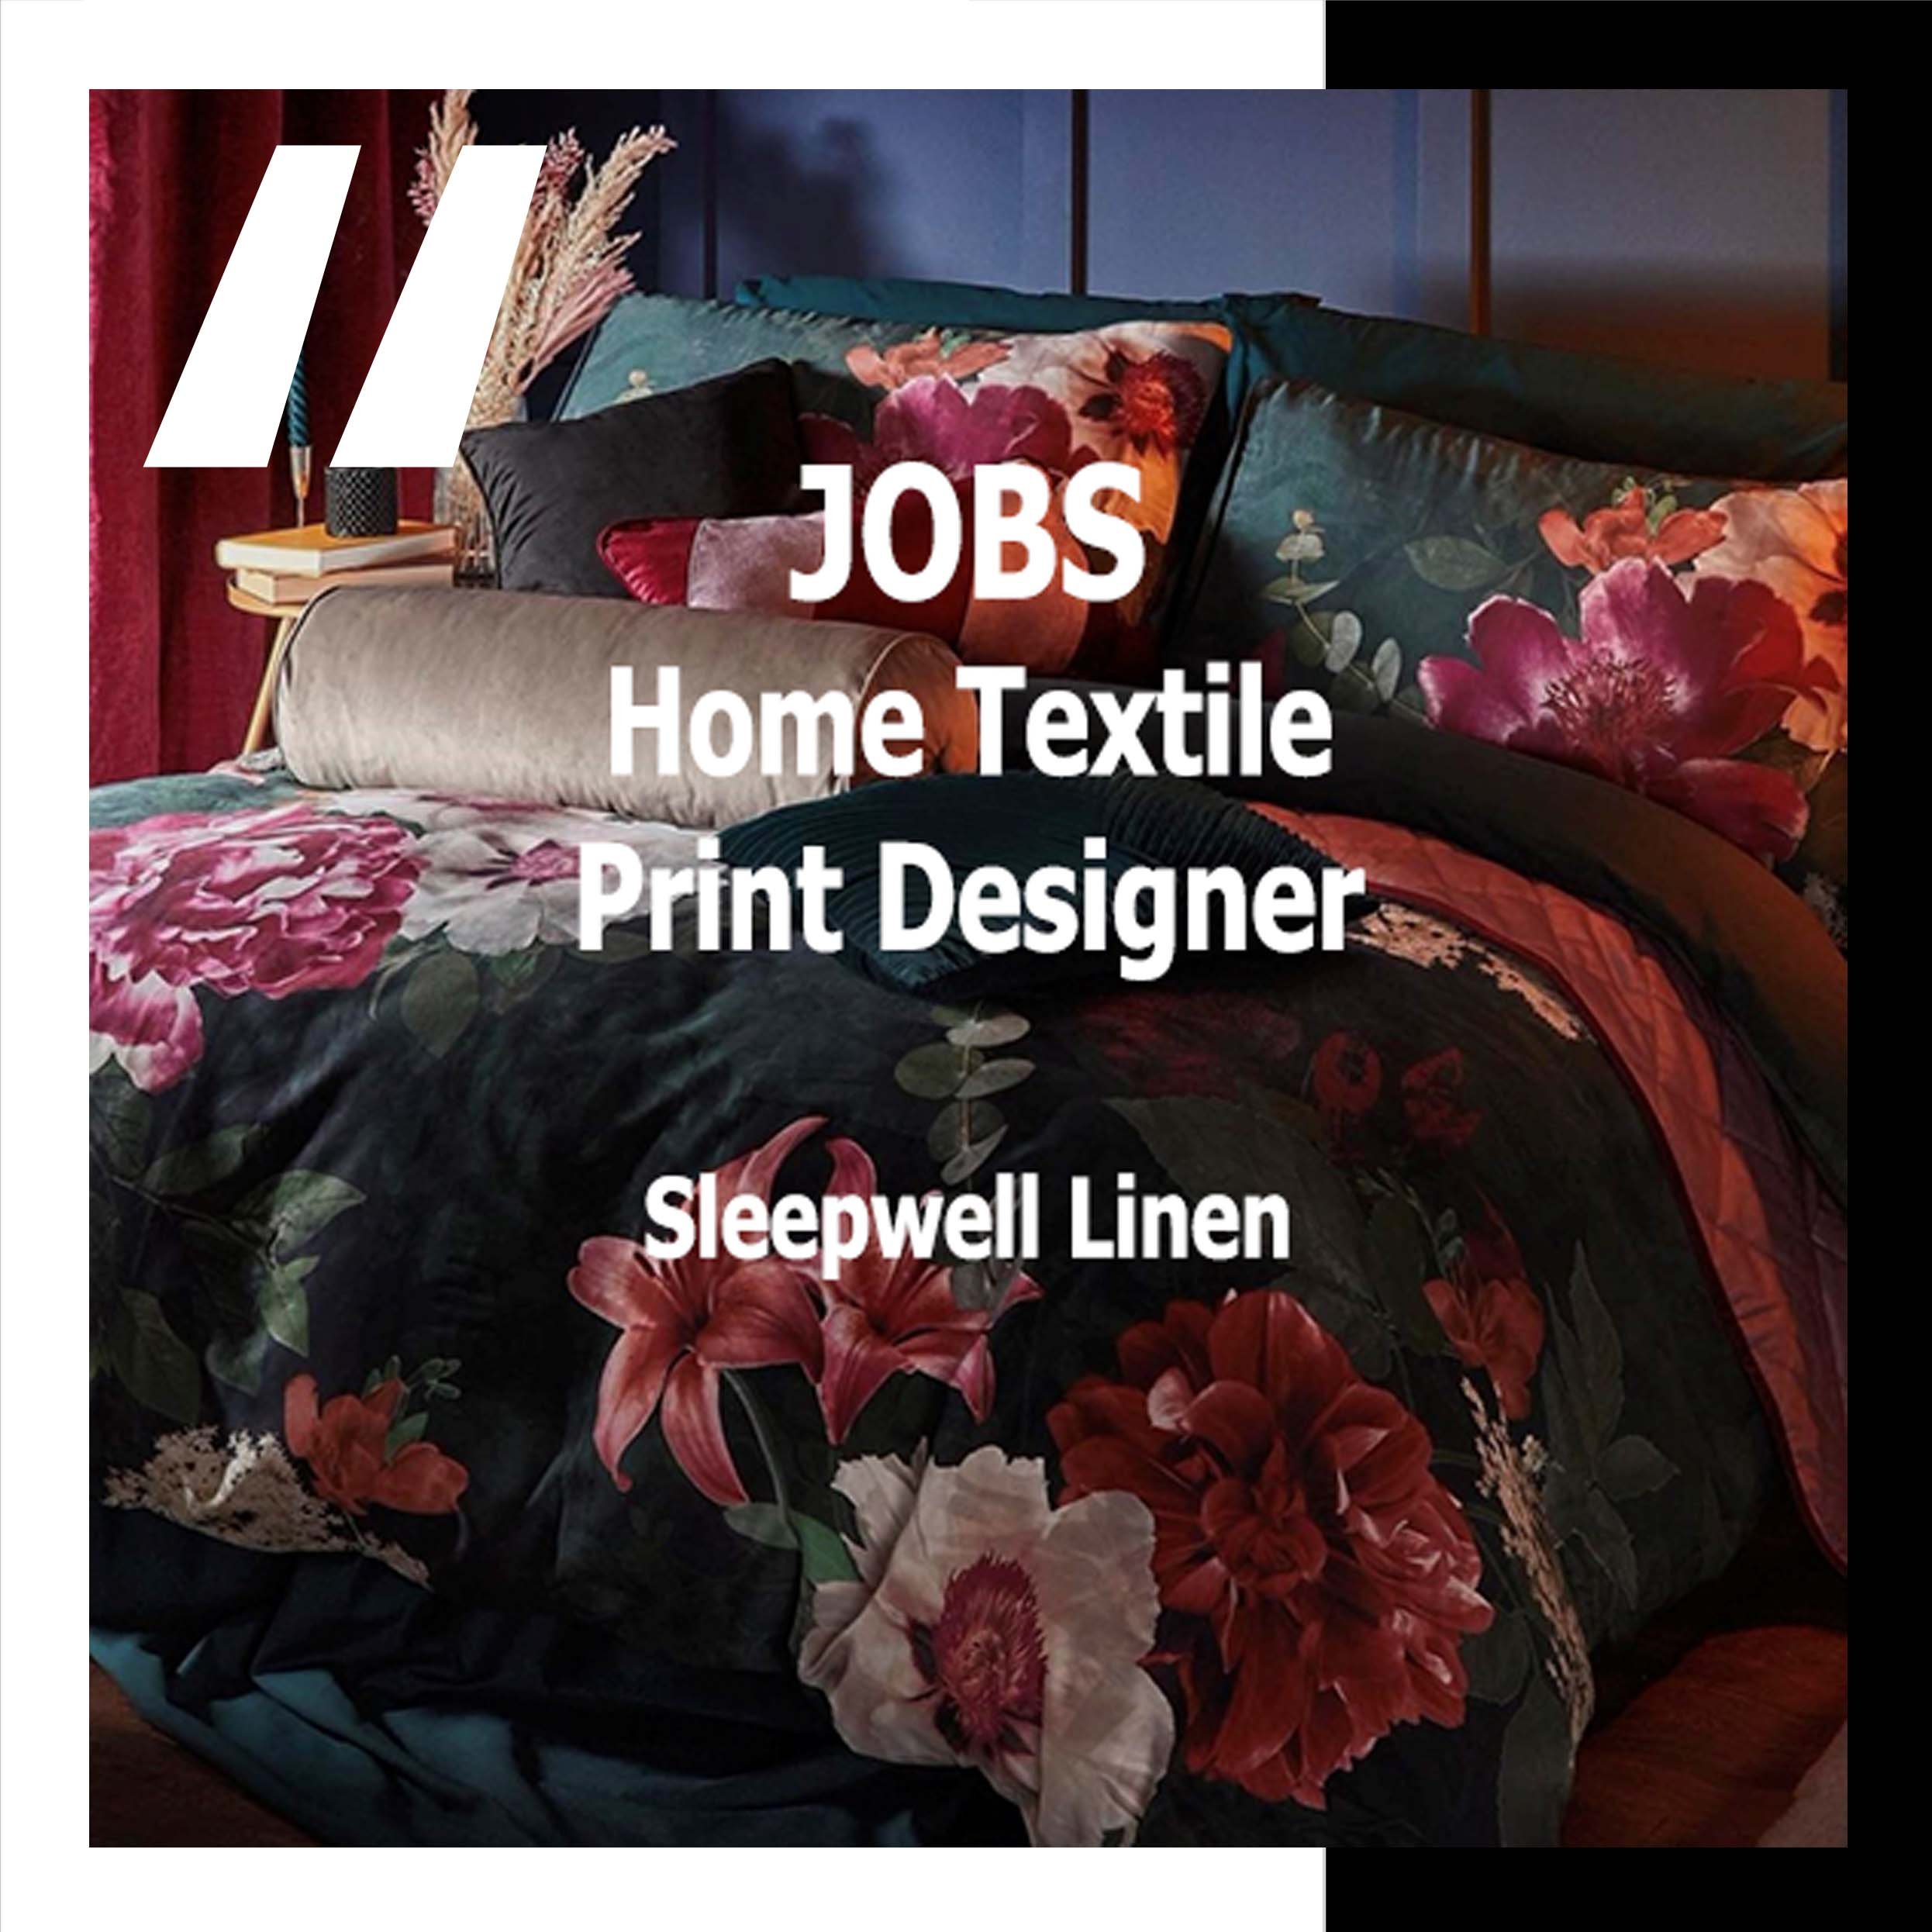 Jobs Home Textiles Print Designer